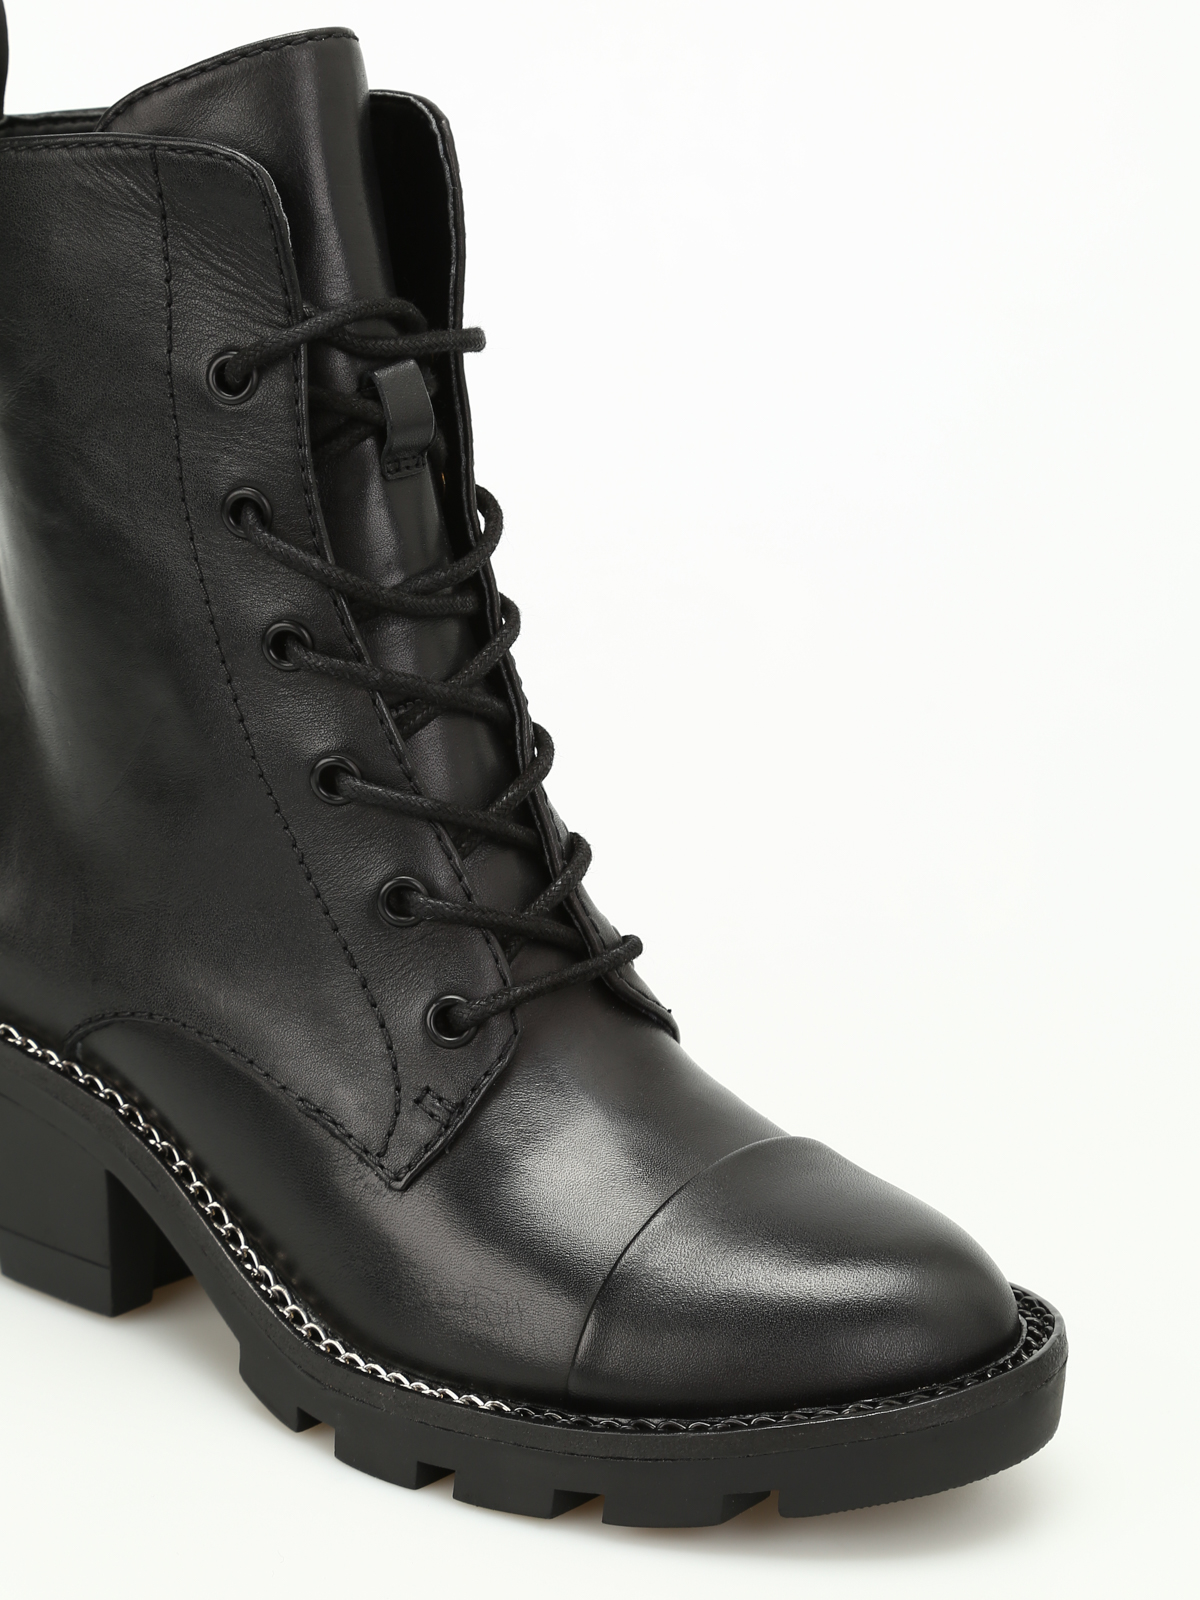 Park leather combat boots - ankle boots 